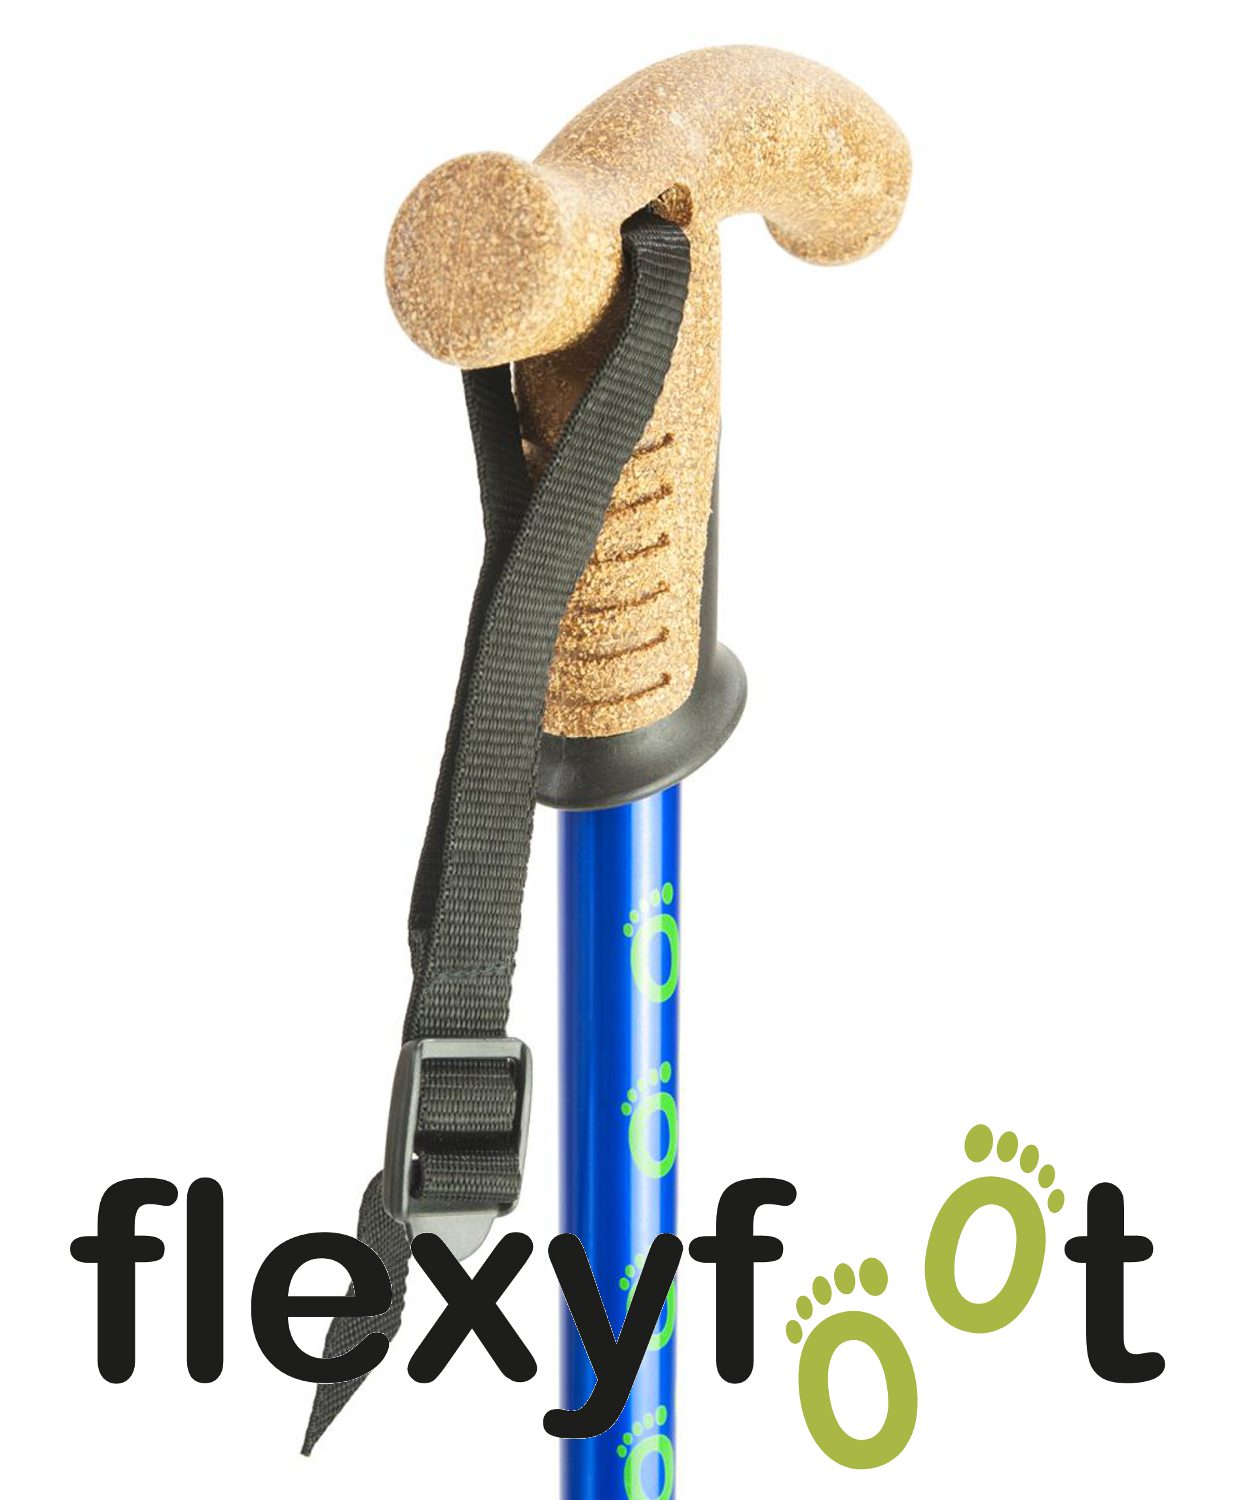 Flexyfoot Telescopic Walking Stick | Bush Healthcare